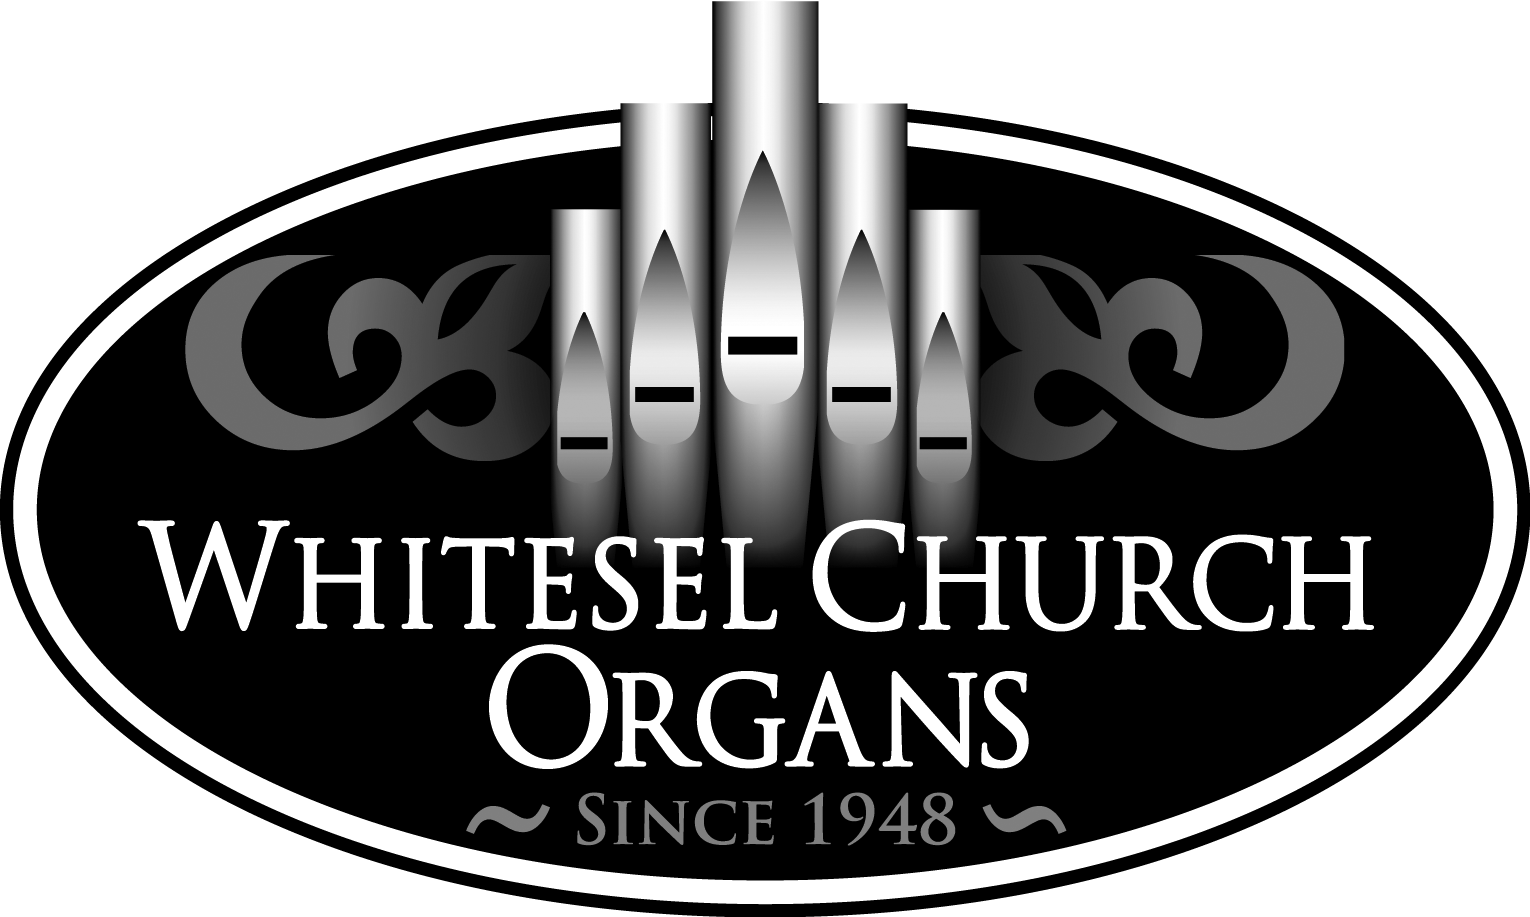 Whitesel Church Organs